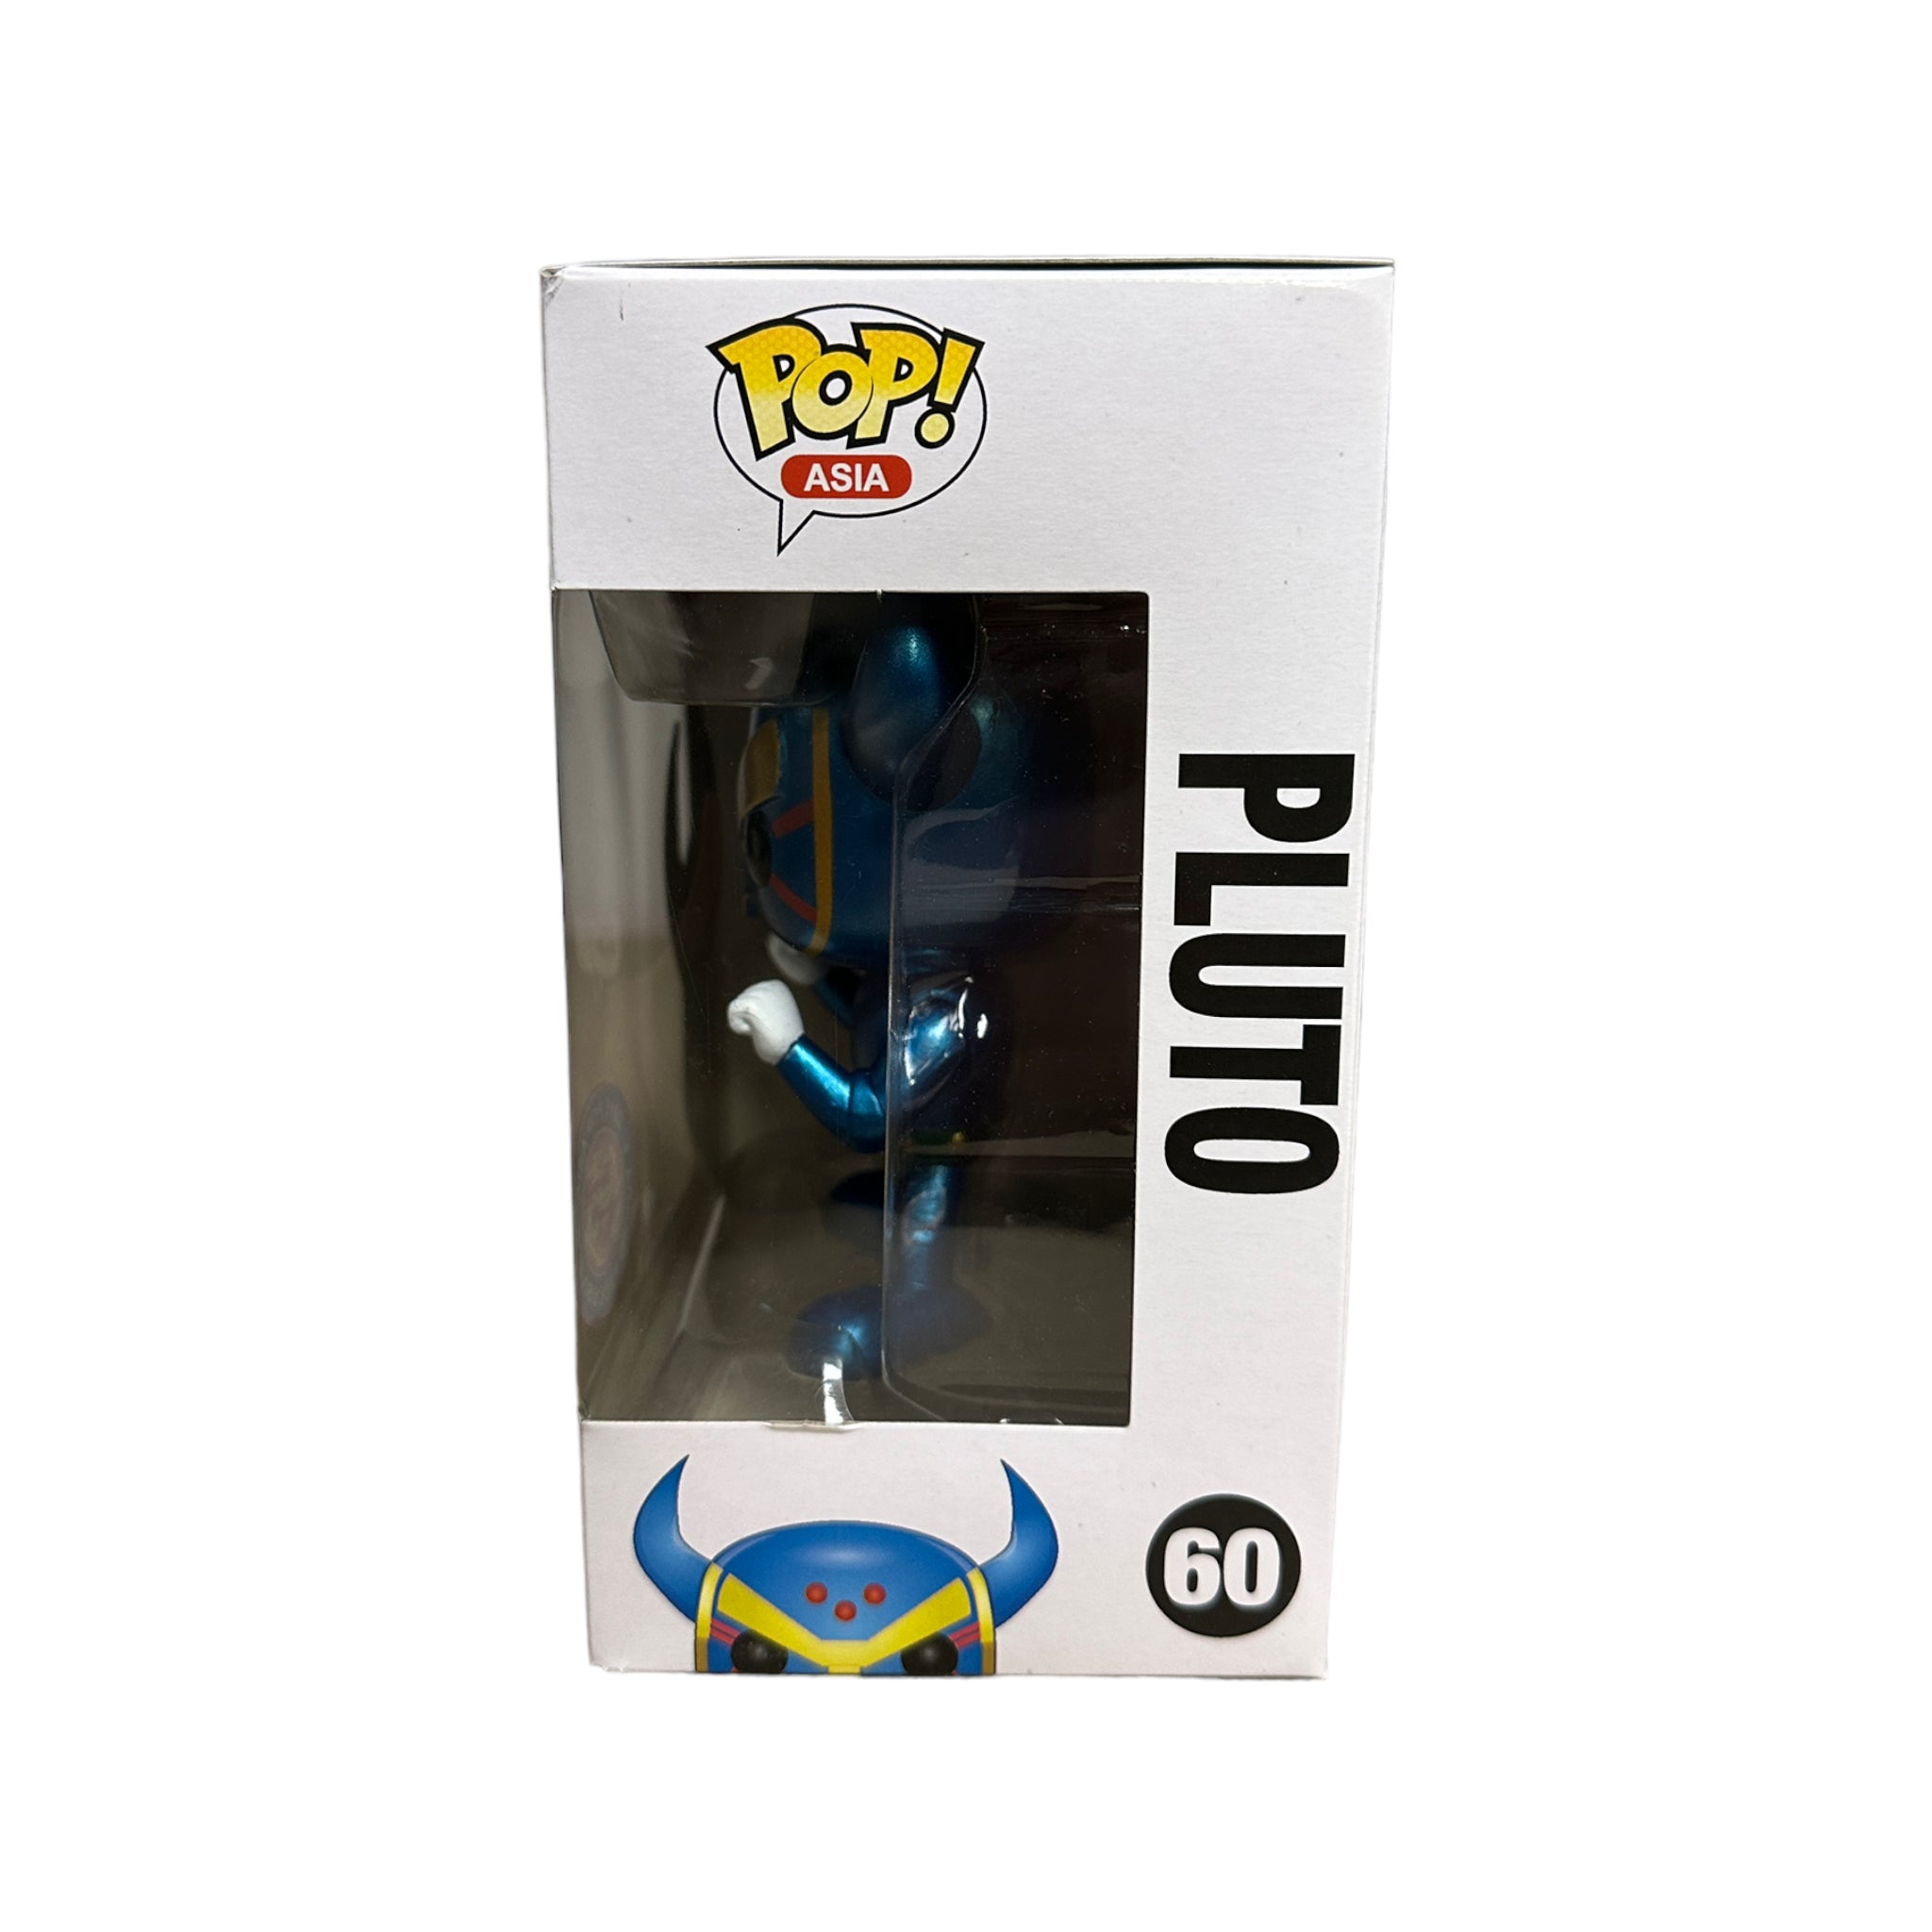 Pluto #60 (Metallic) Funko Pop! - Astro Boy - 2015 Asia Exclusive - Condition 8.75/10